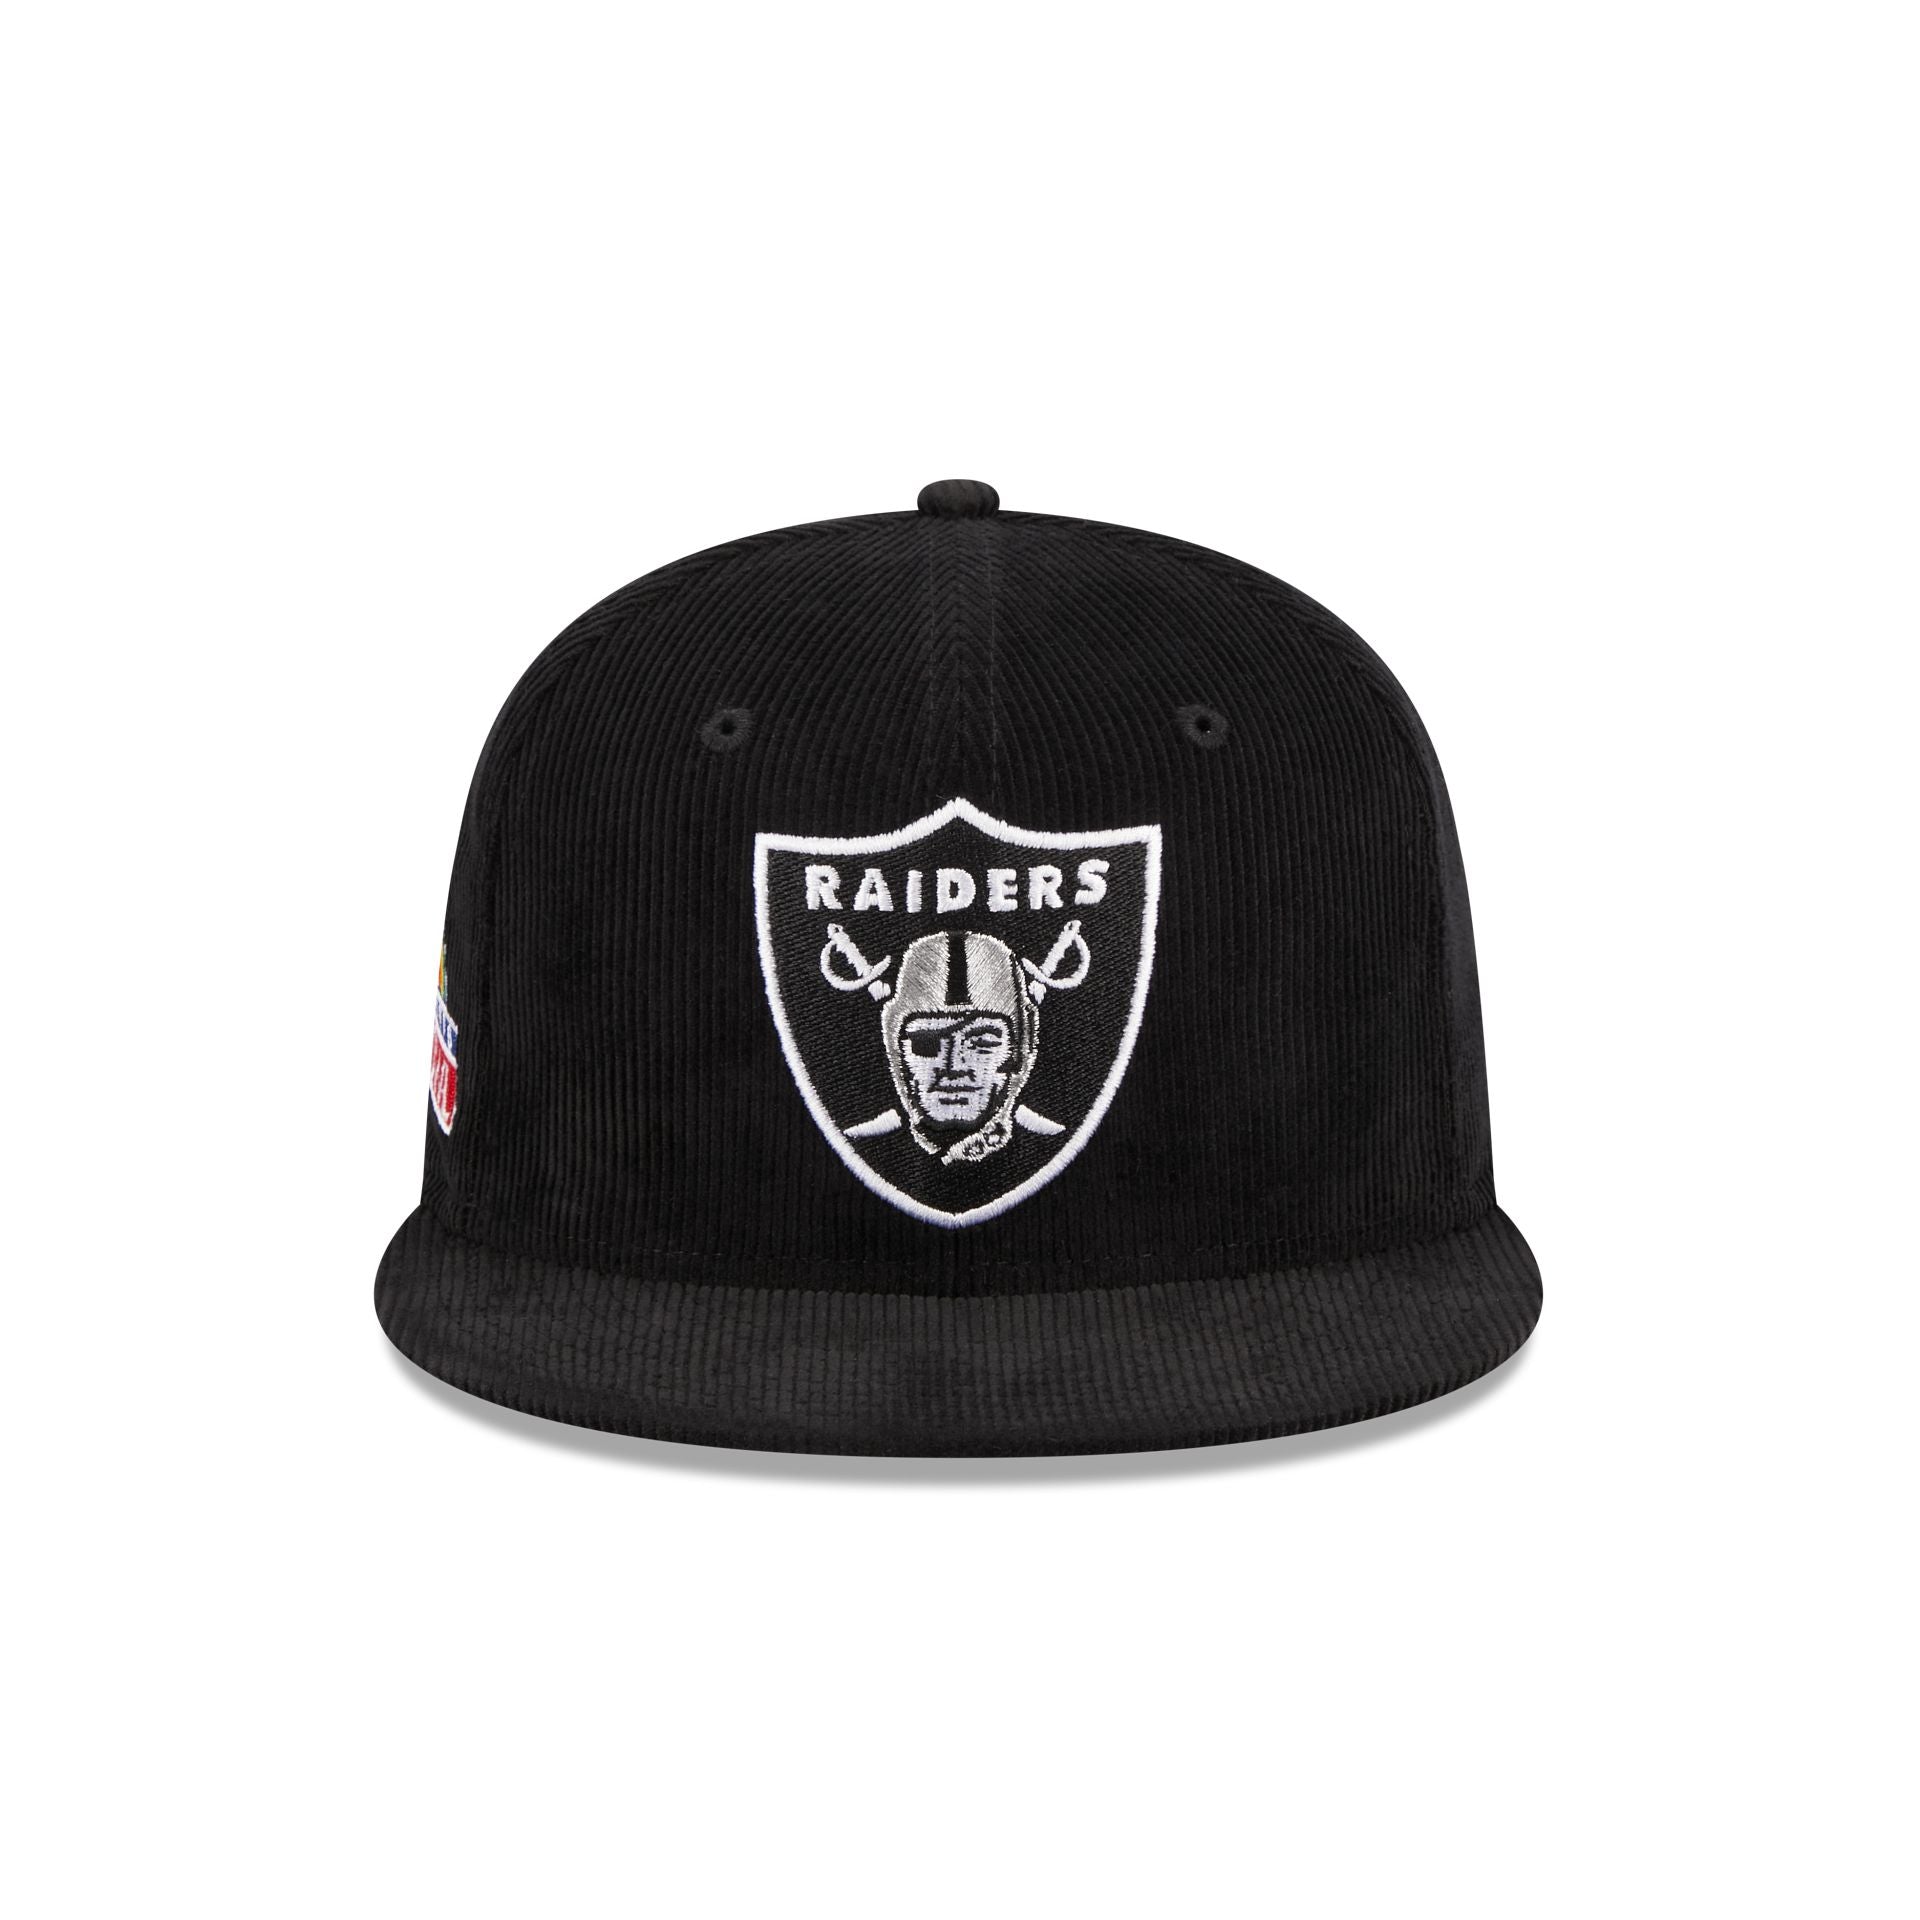 Raiders — Las Vegas Raiders Hat